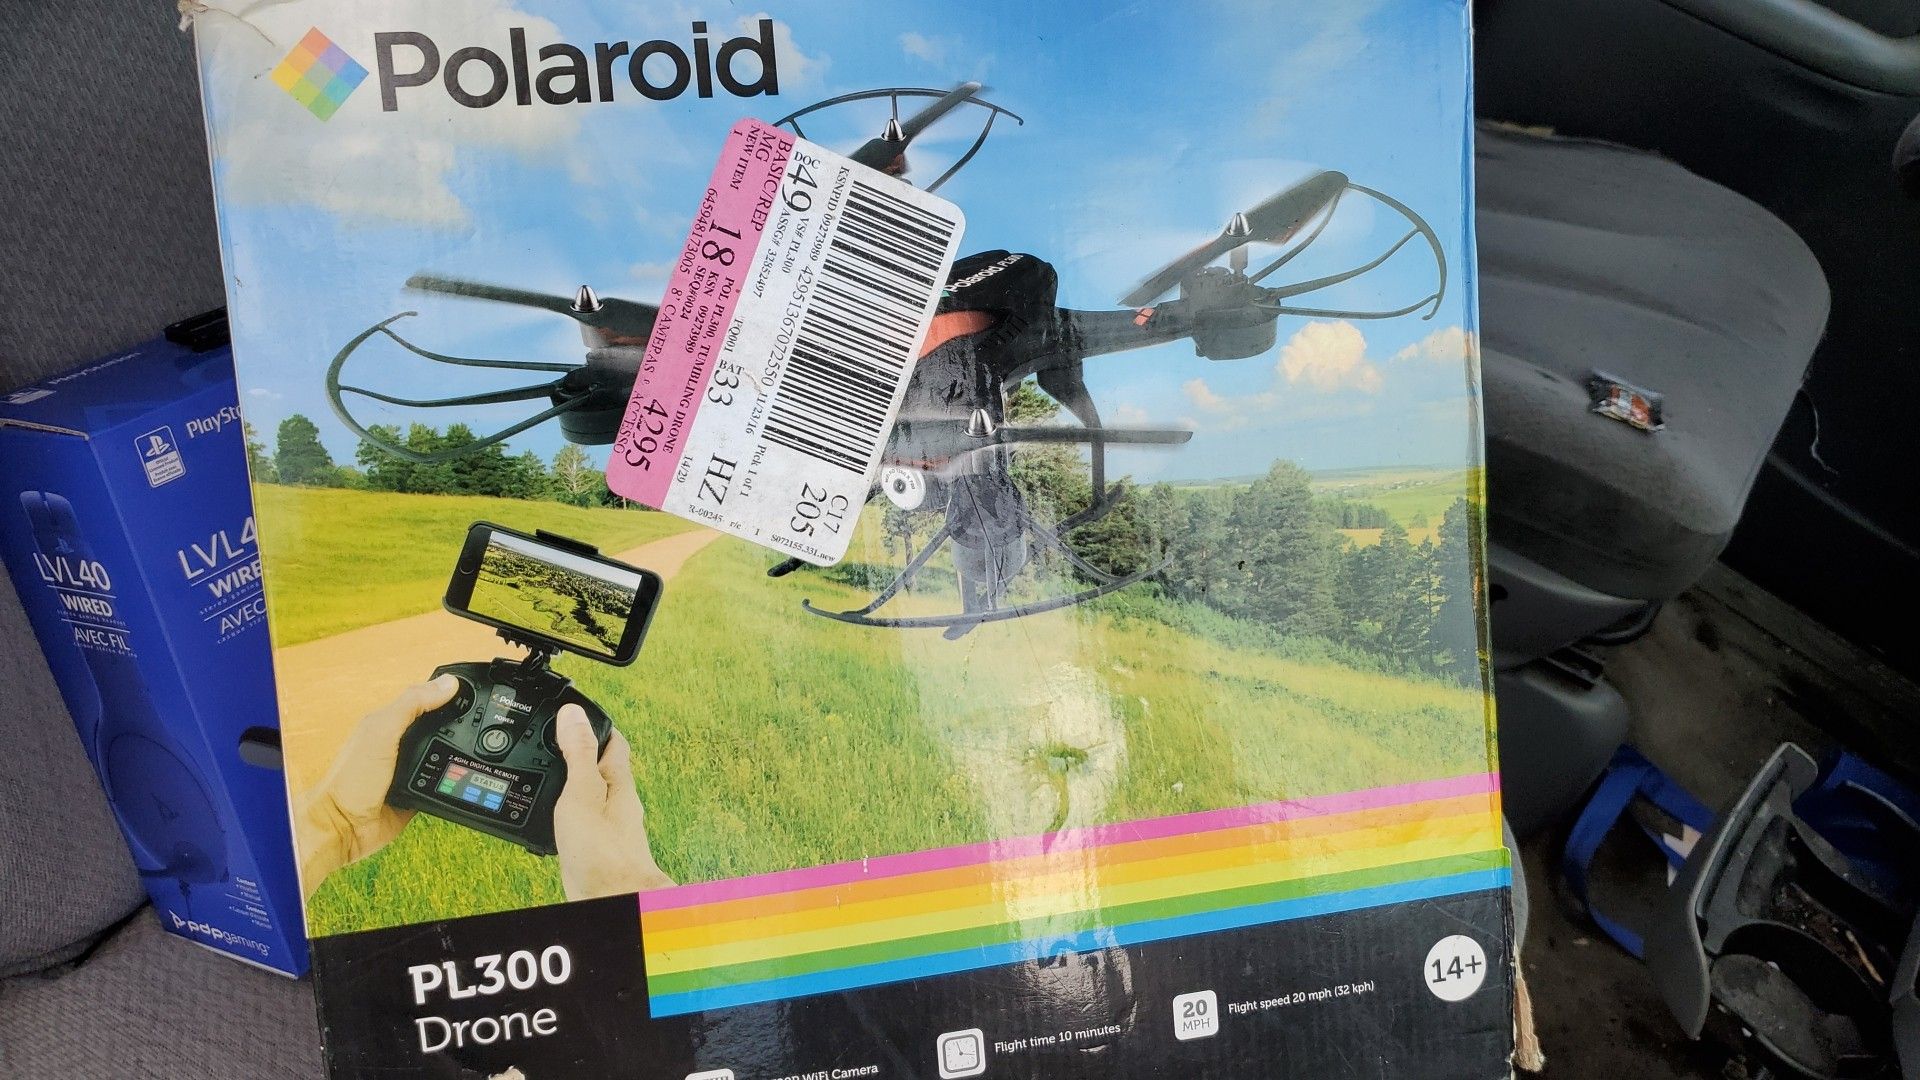 Polaroid pl300 drone